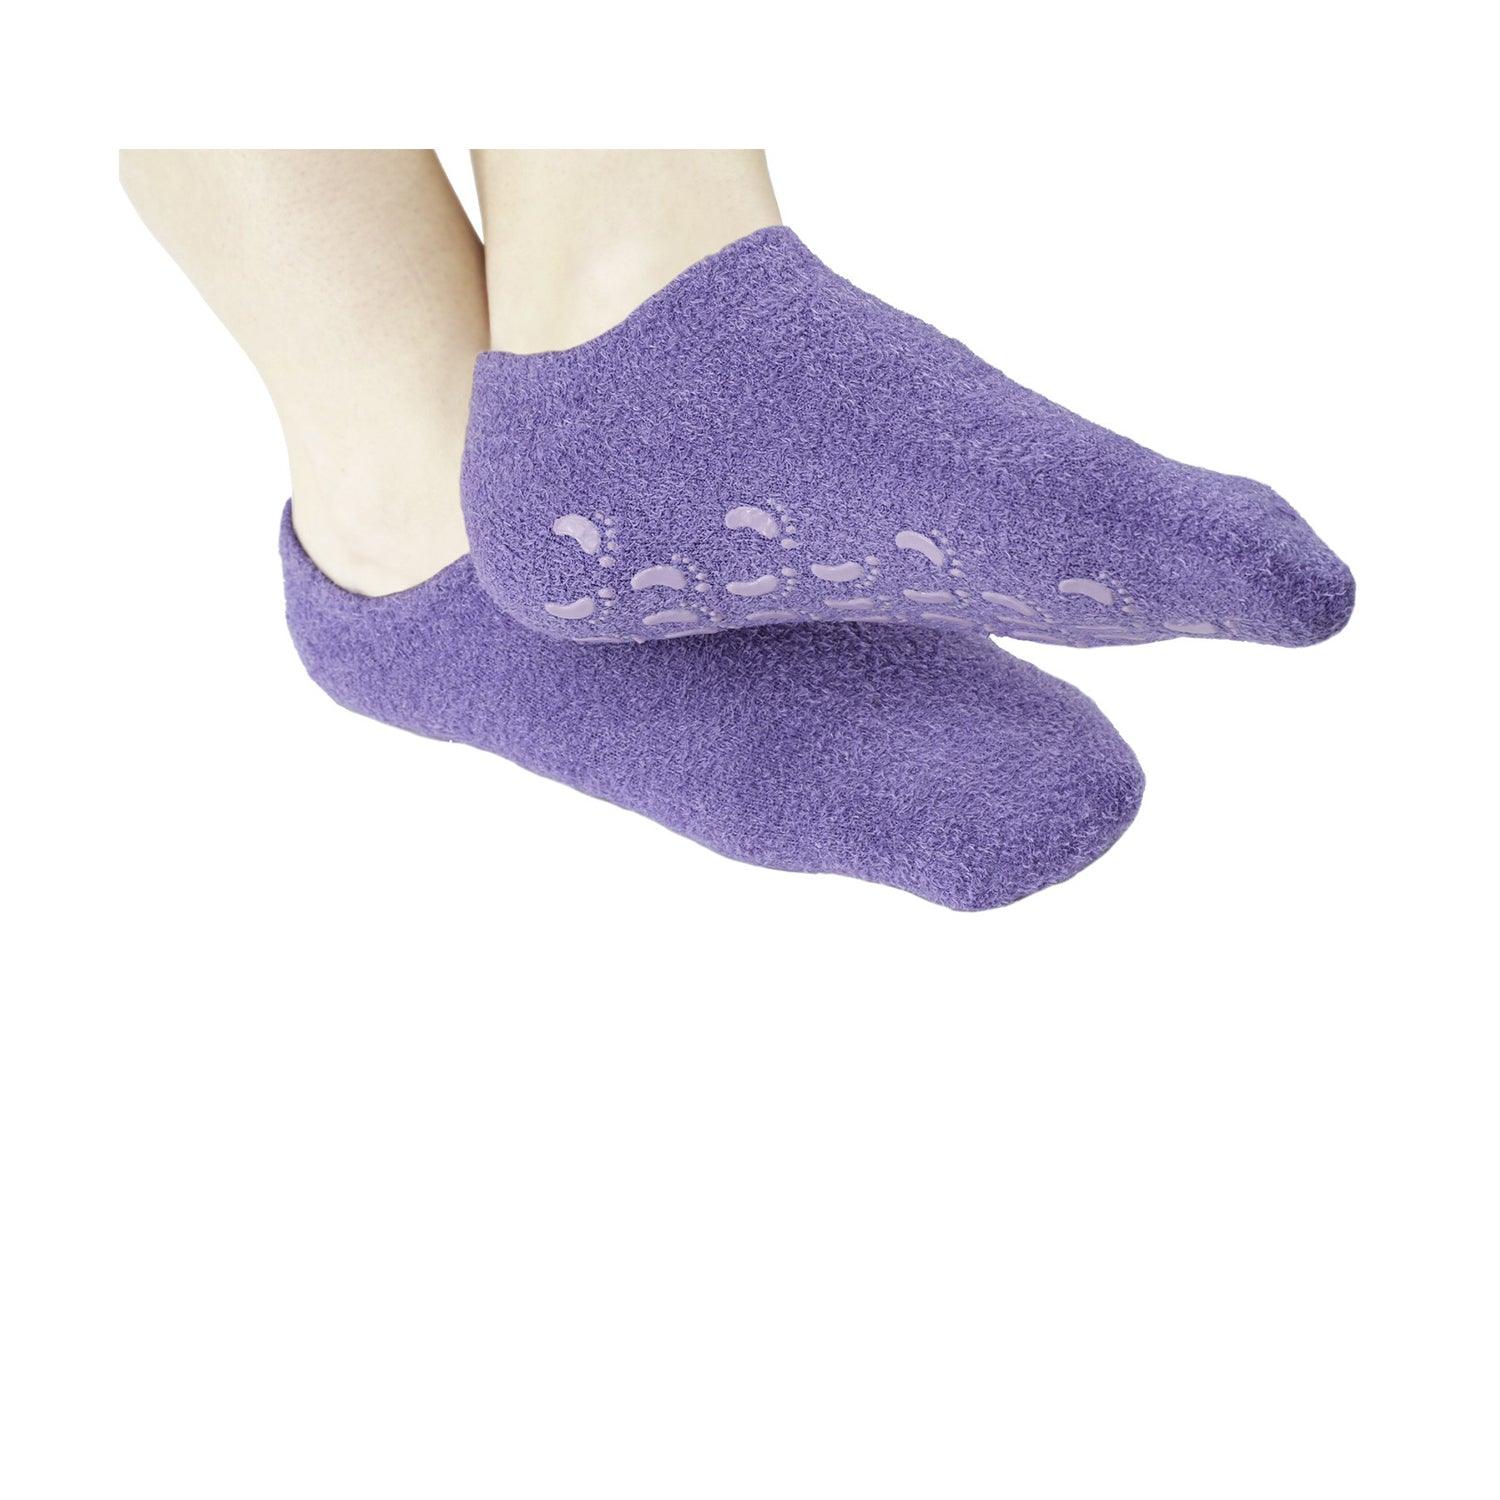 Bedtime Booties, Moisturizing Socks